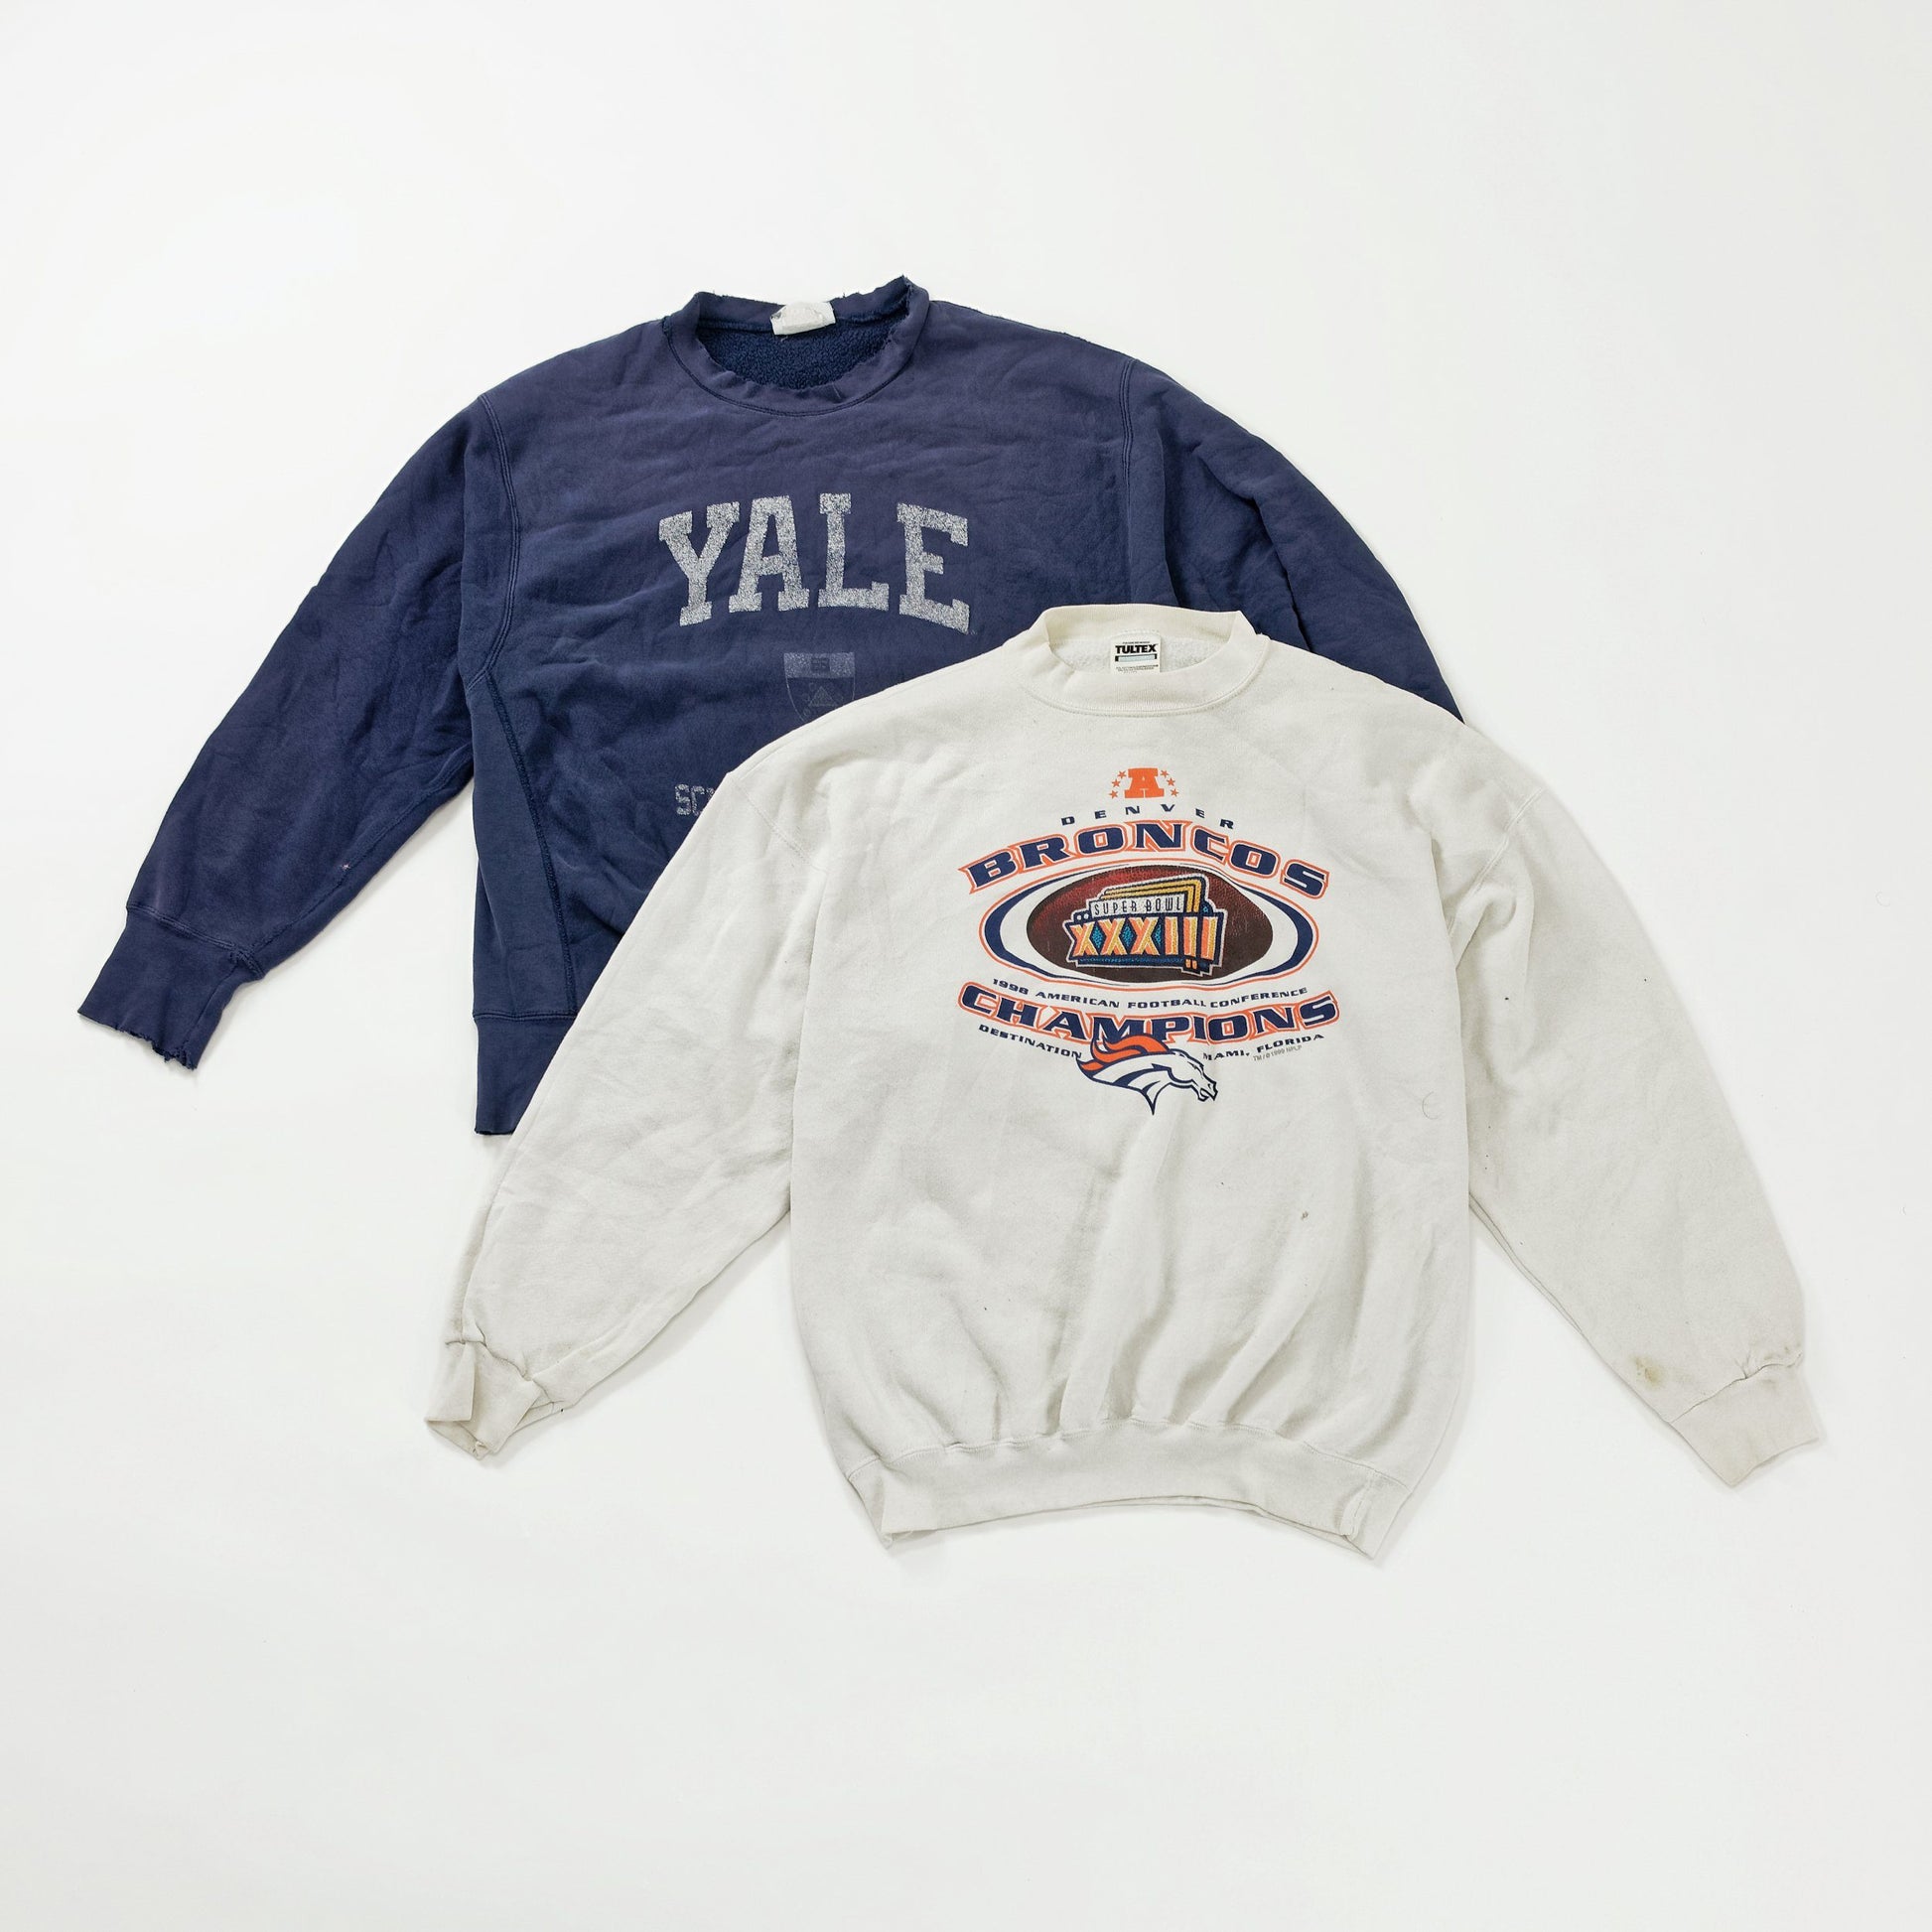 Authentic Vintage Crewneck Sweatshirts | Set of 2 Sweatshirts & Sweaters Goodfair 